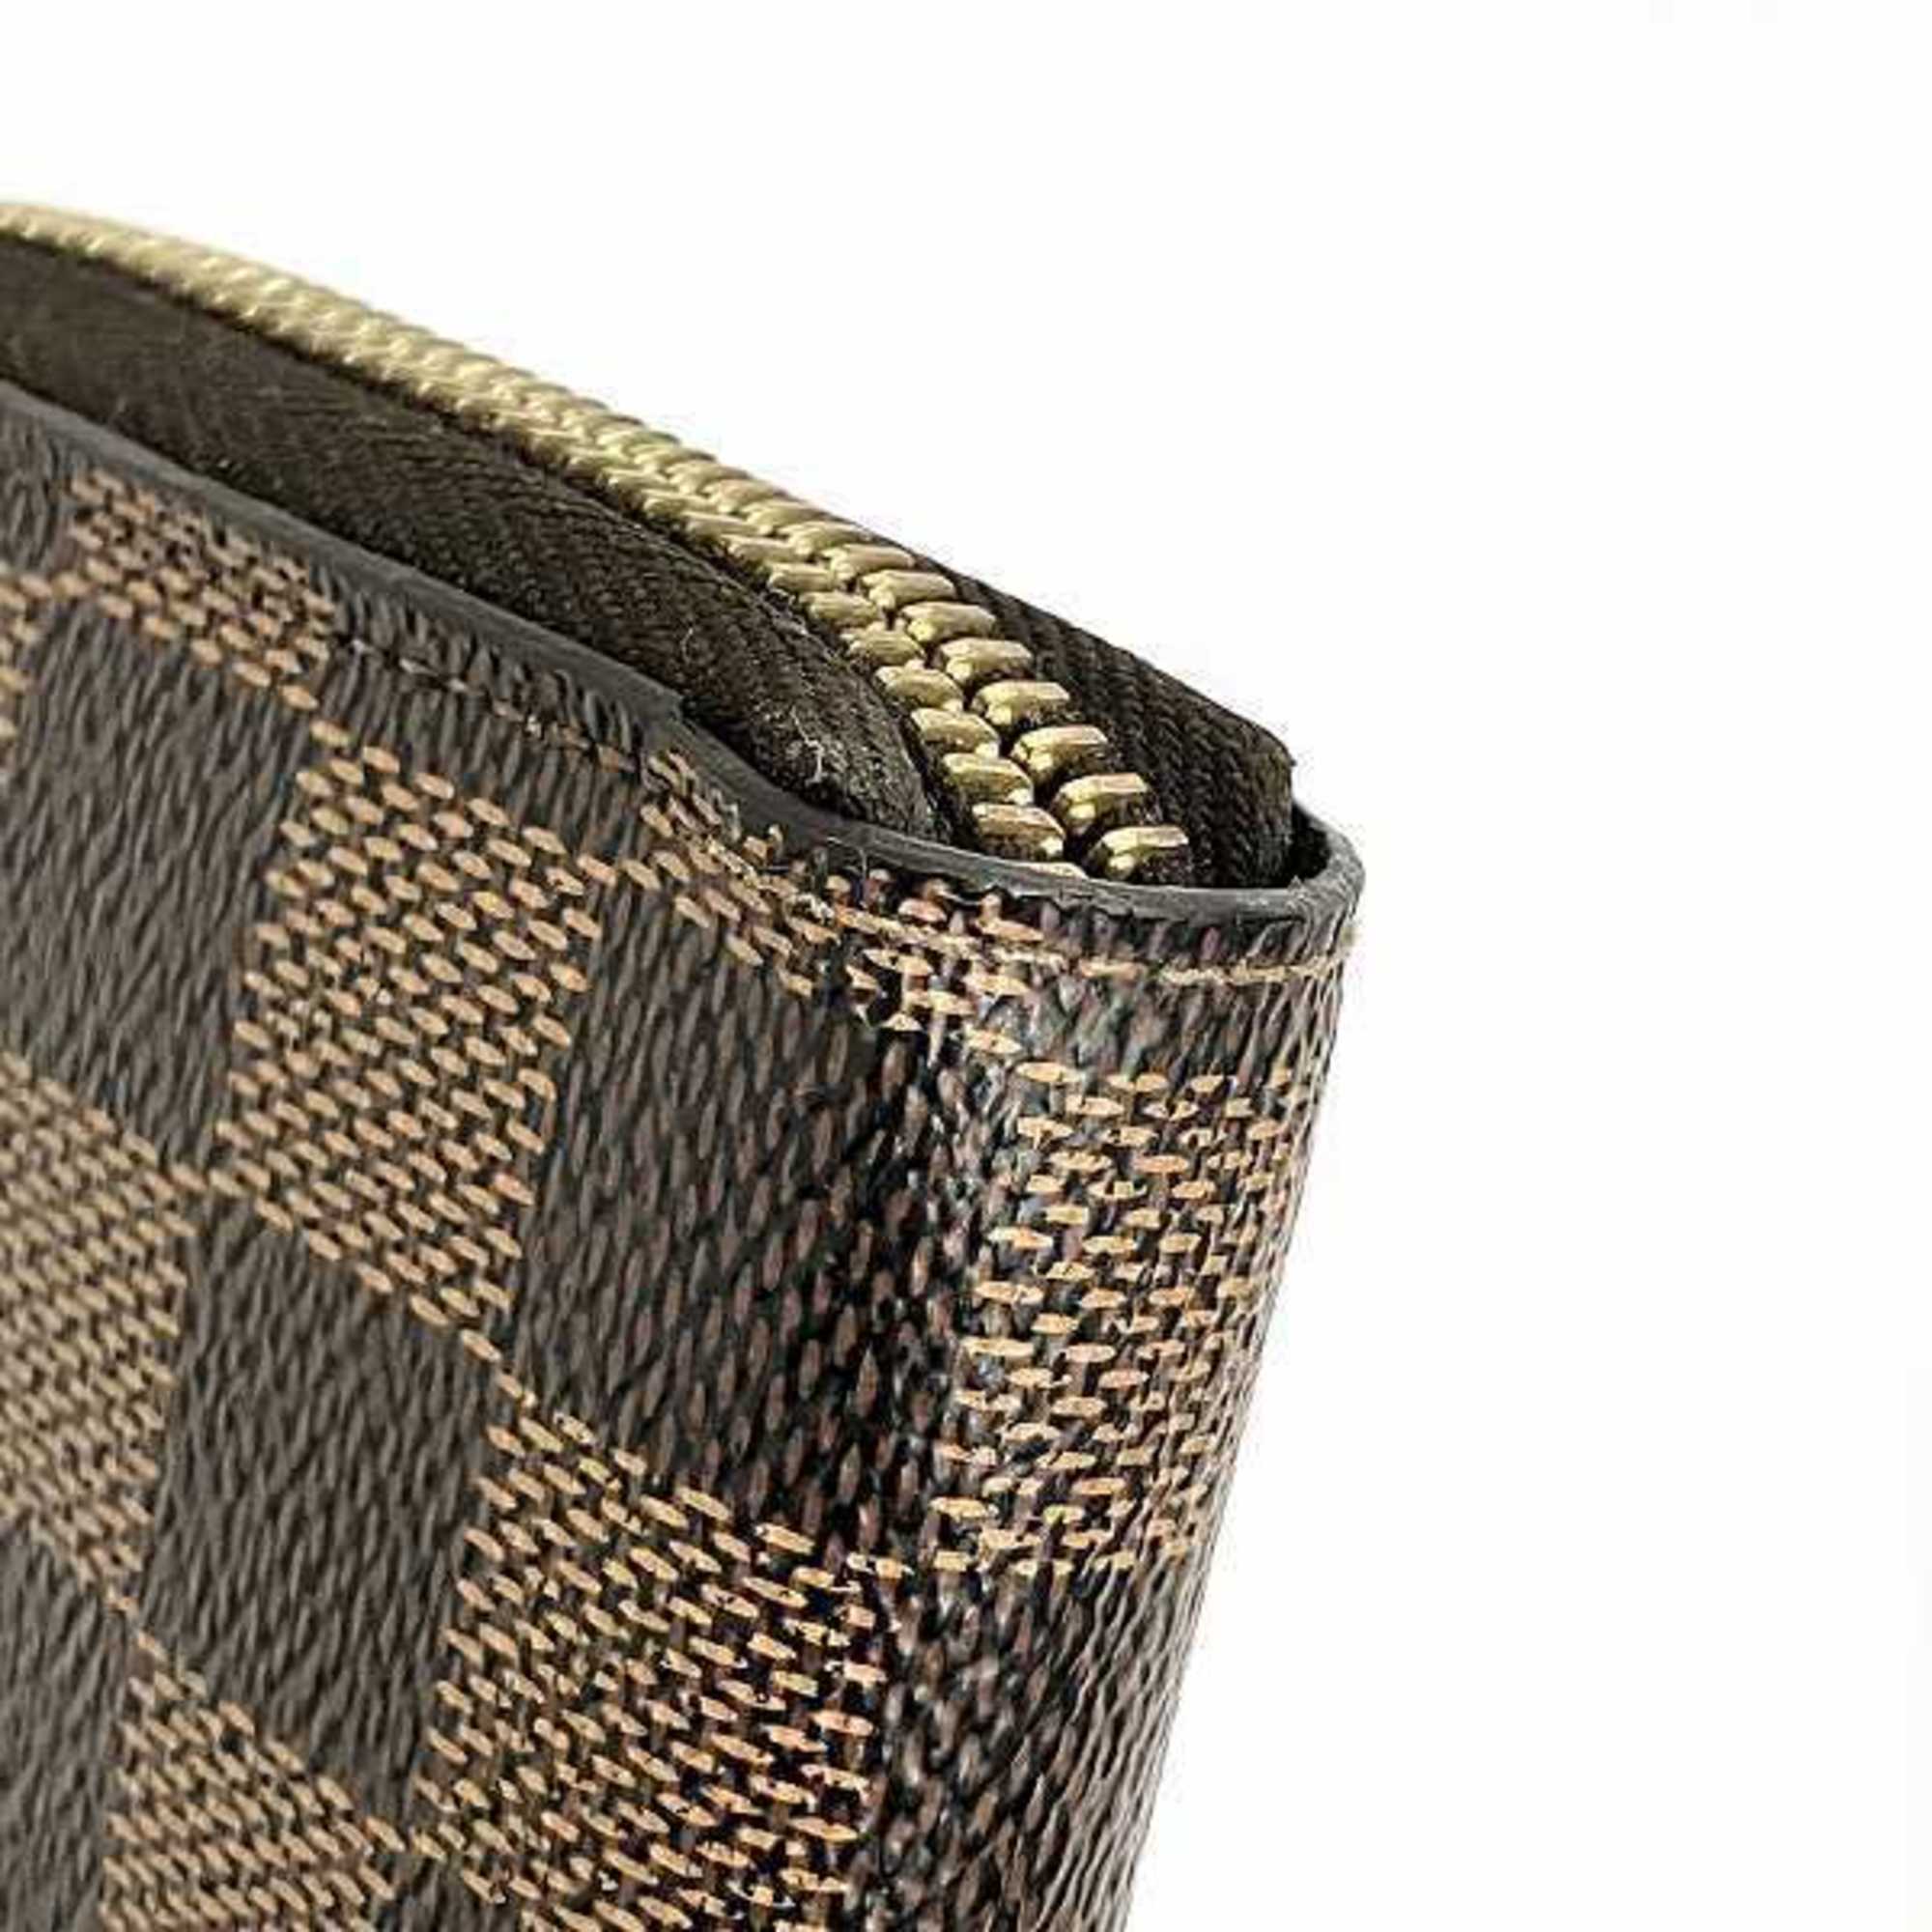 Louis Vuitton Damier Zippy Wallet N60015 Round Long for Men and Women